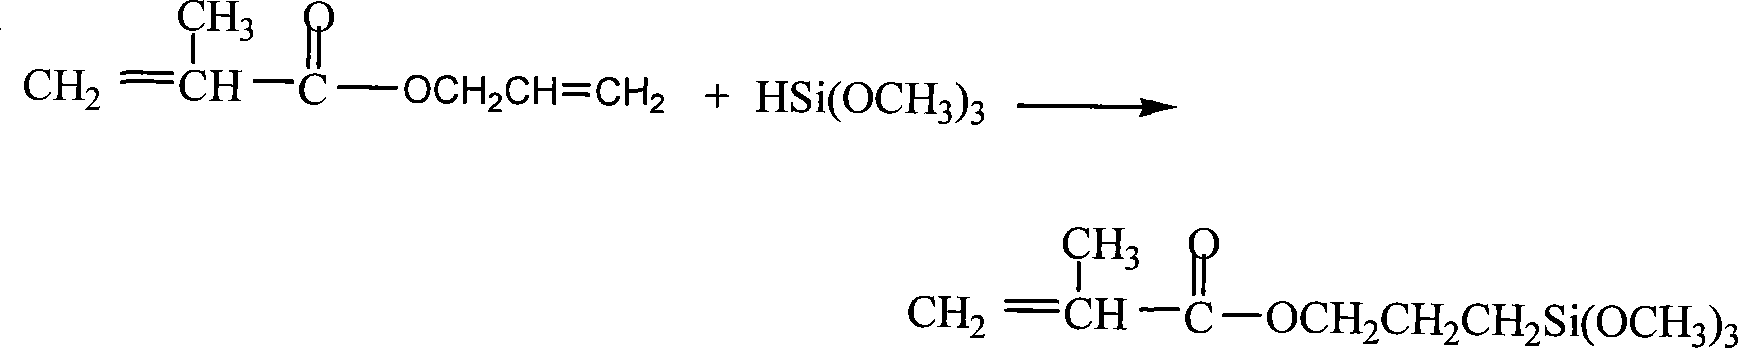 Method for preparing 3-(methacryloxy)propyltrimethoxysilane